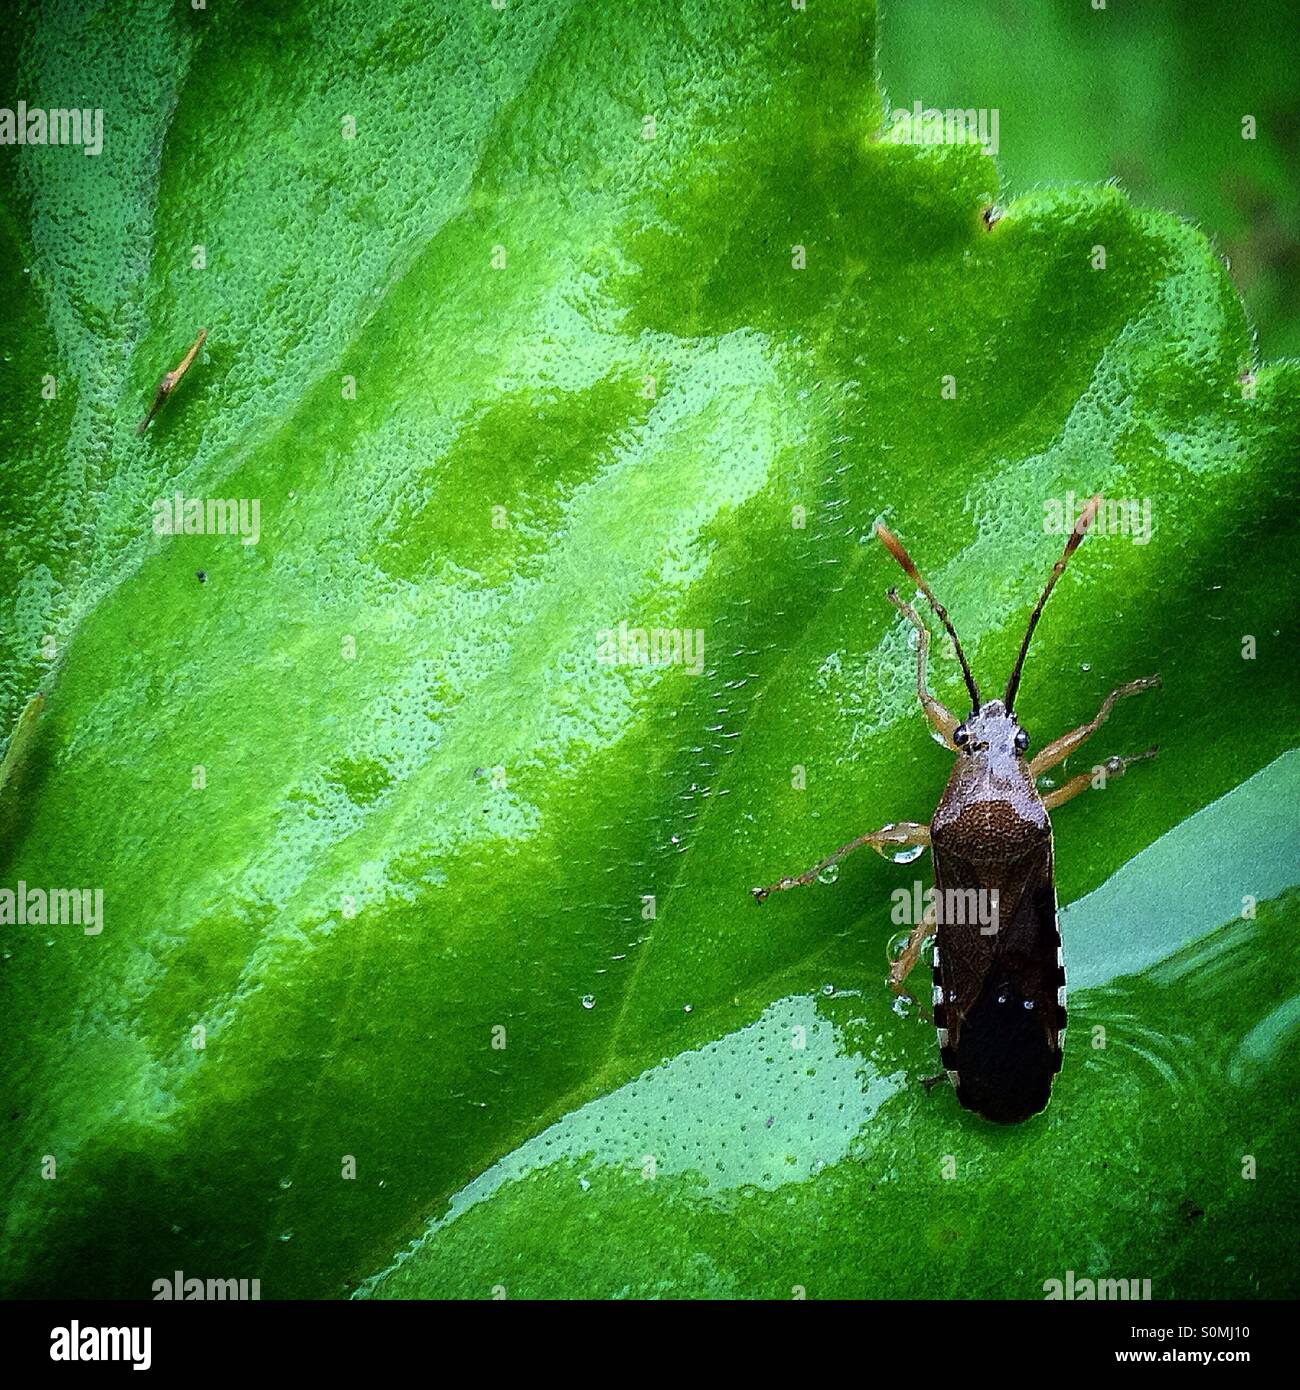 A bug in a wet green leaf in Hostal Medieval, Peña de Bernal, Ezequiel Montes. Queretaro, Mexico Stock Photo